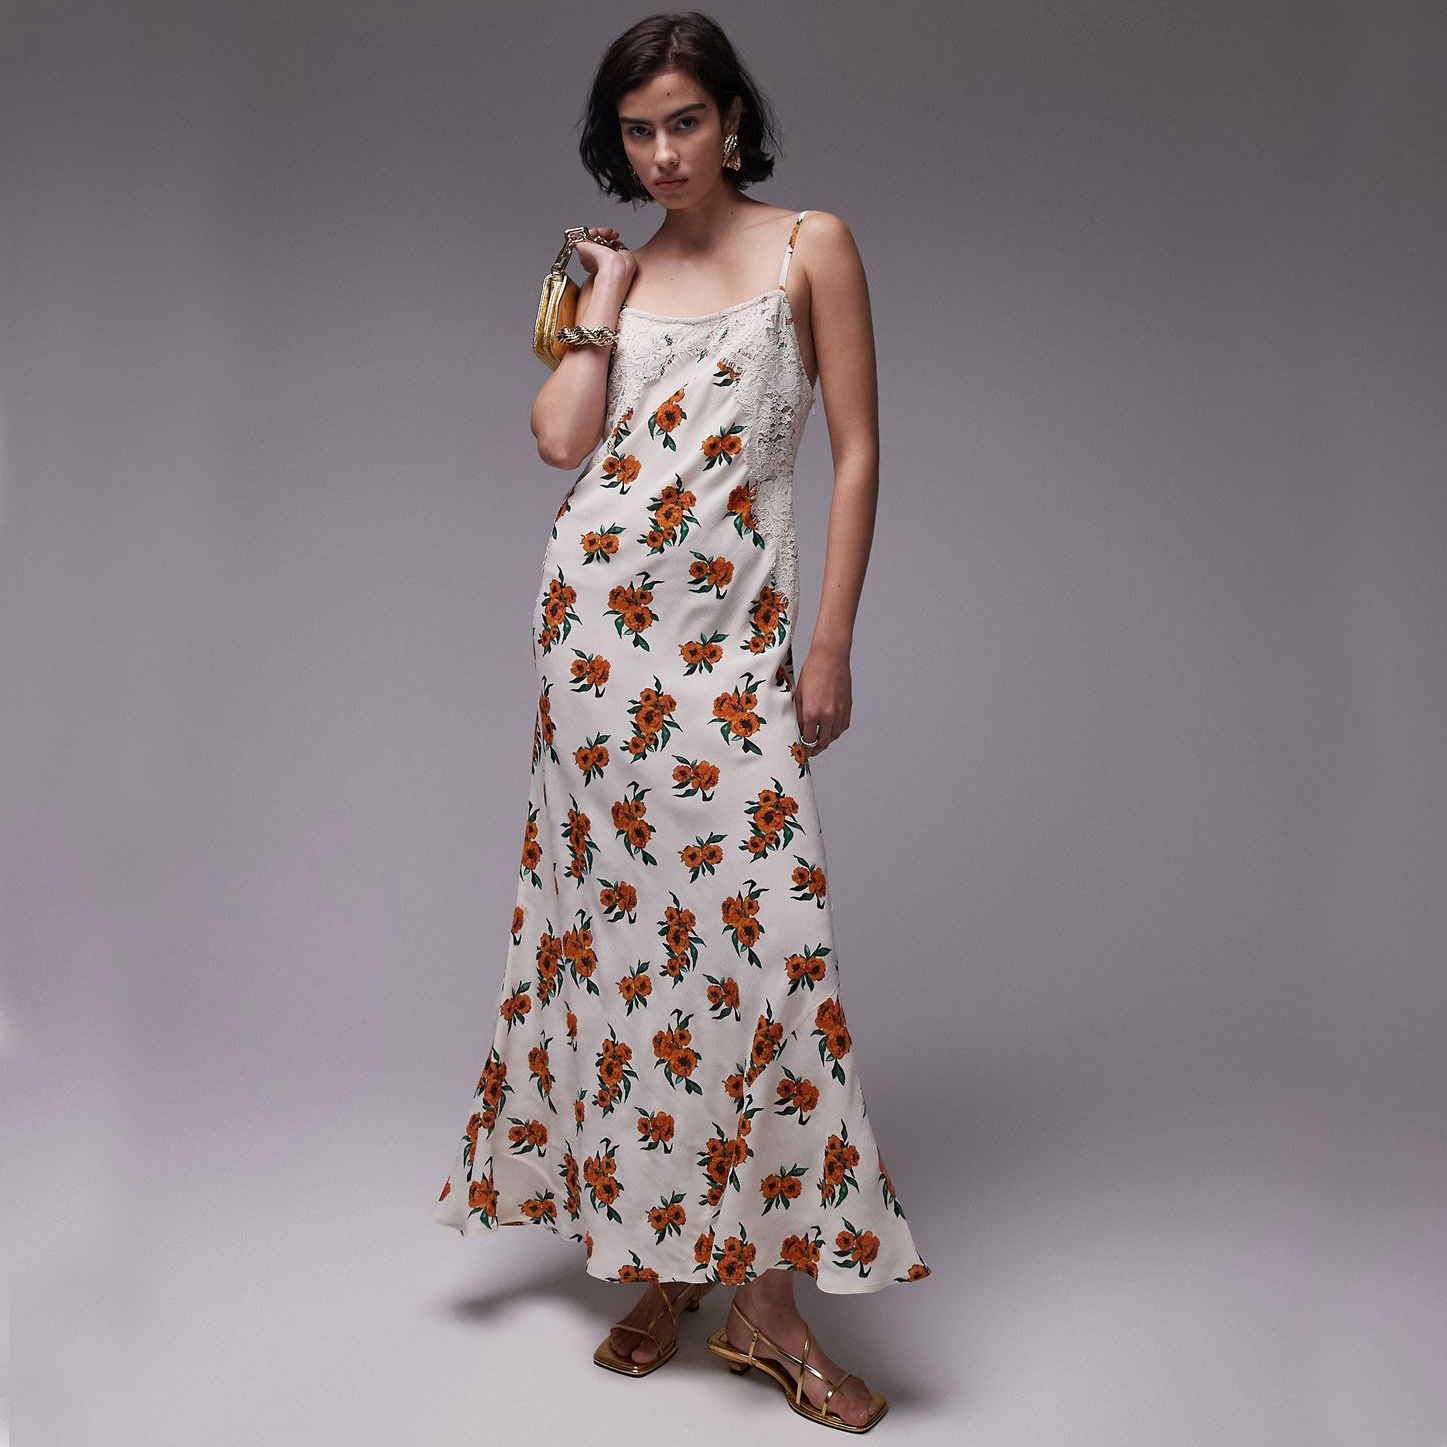 Платье Topshop Strapless Premium Maxi With Lace Floral Pattern, белый/оранжевый цена и фото